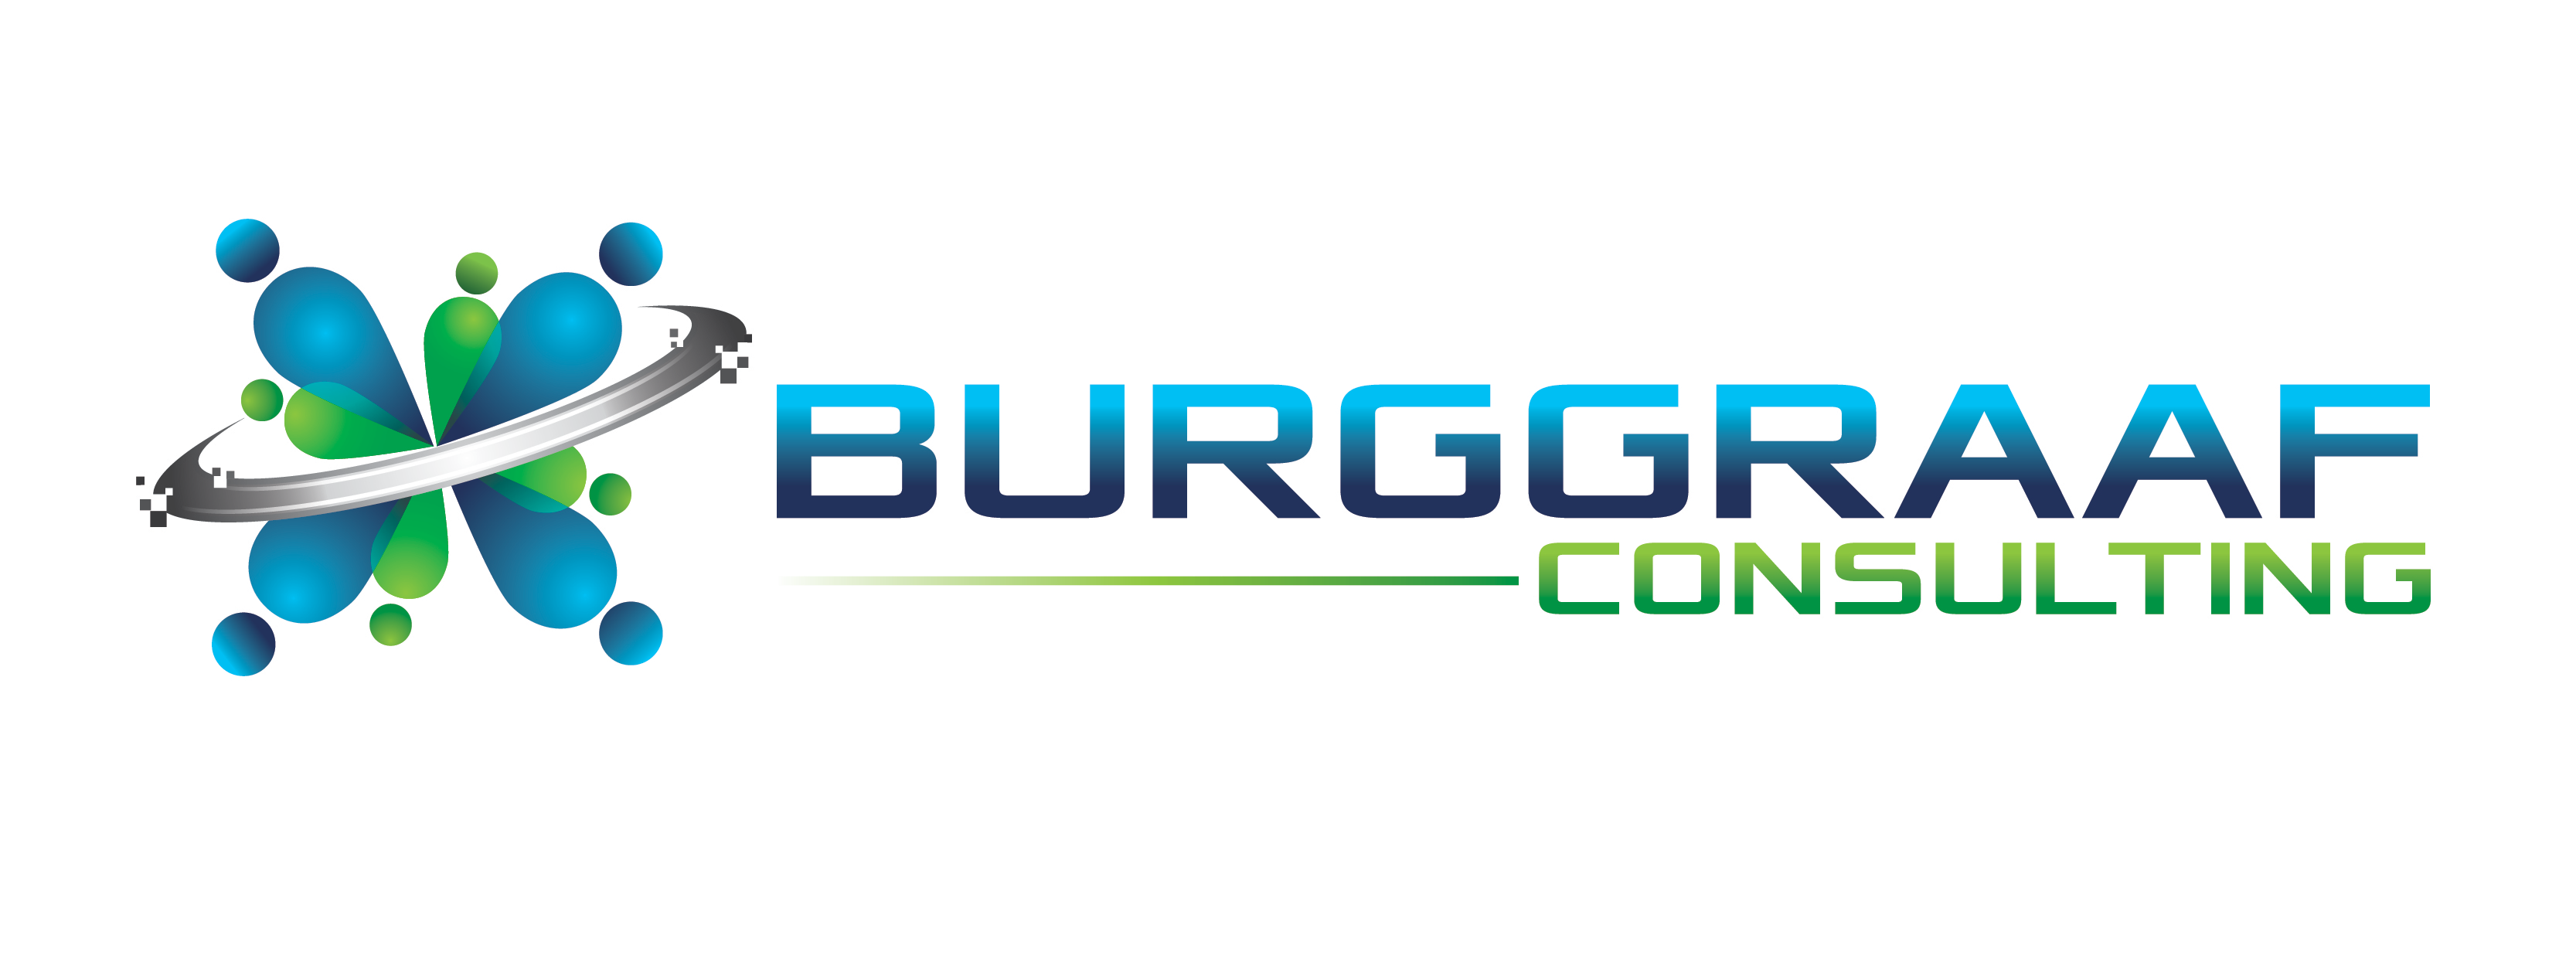 Burggraaf Consulting_rgb.jpg